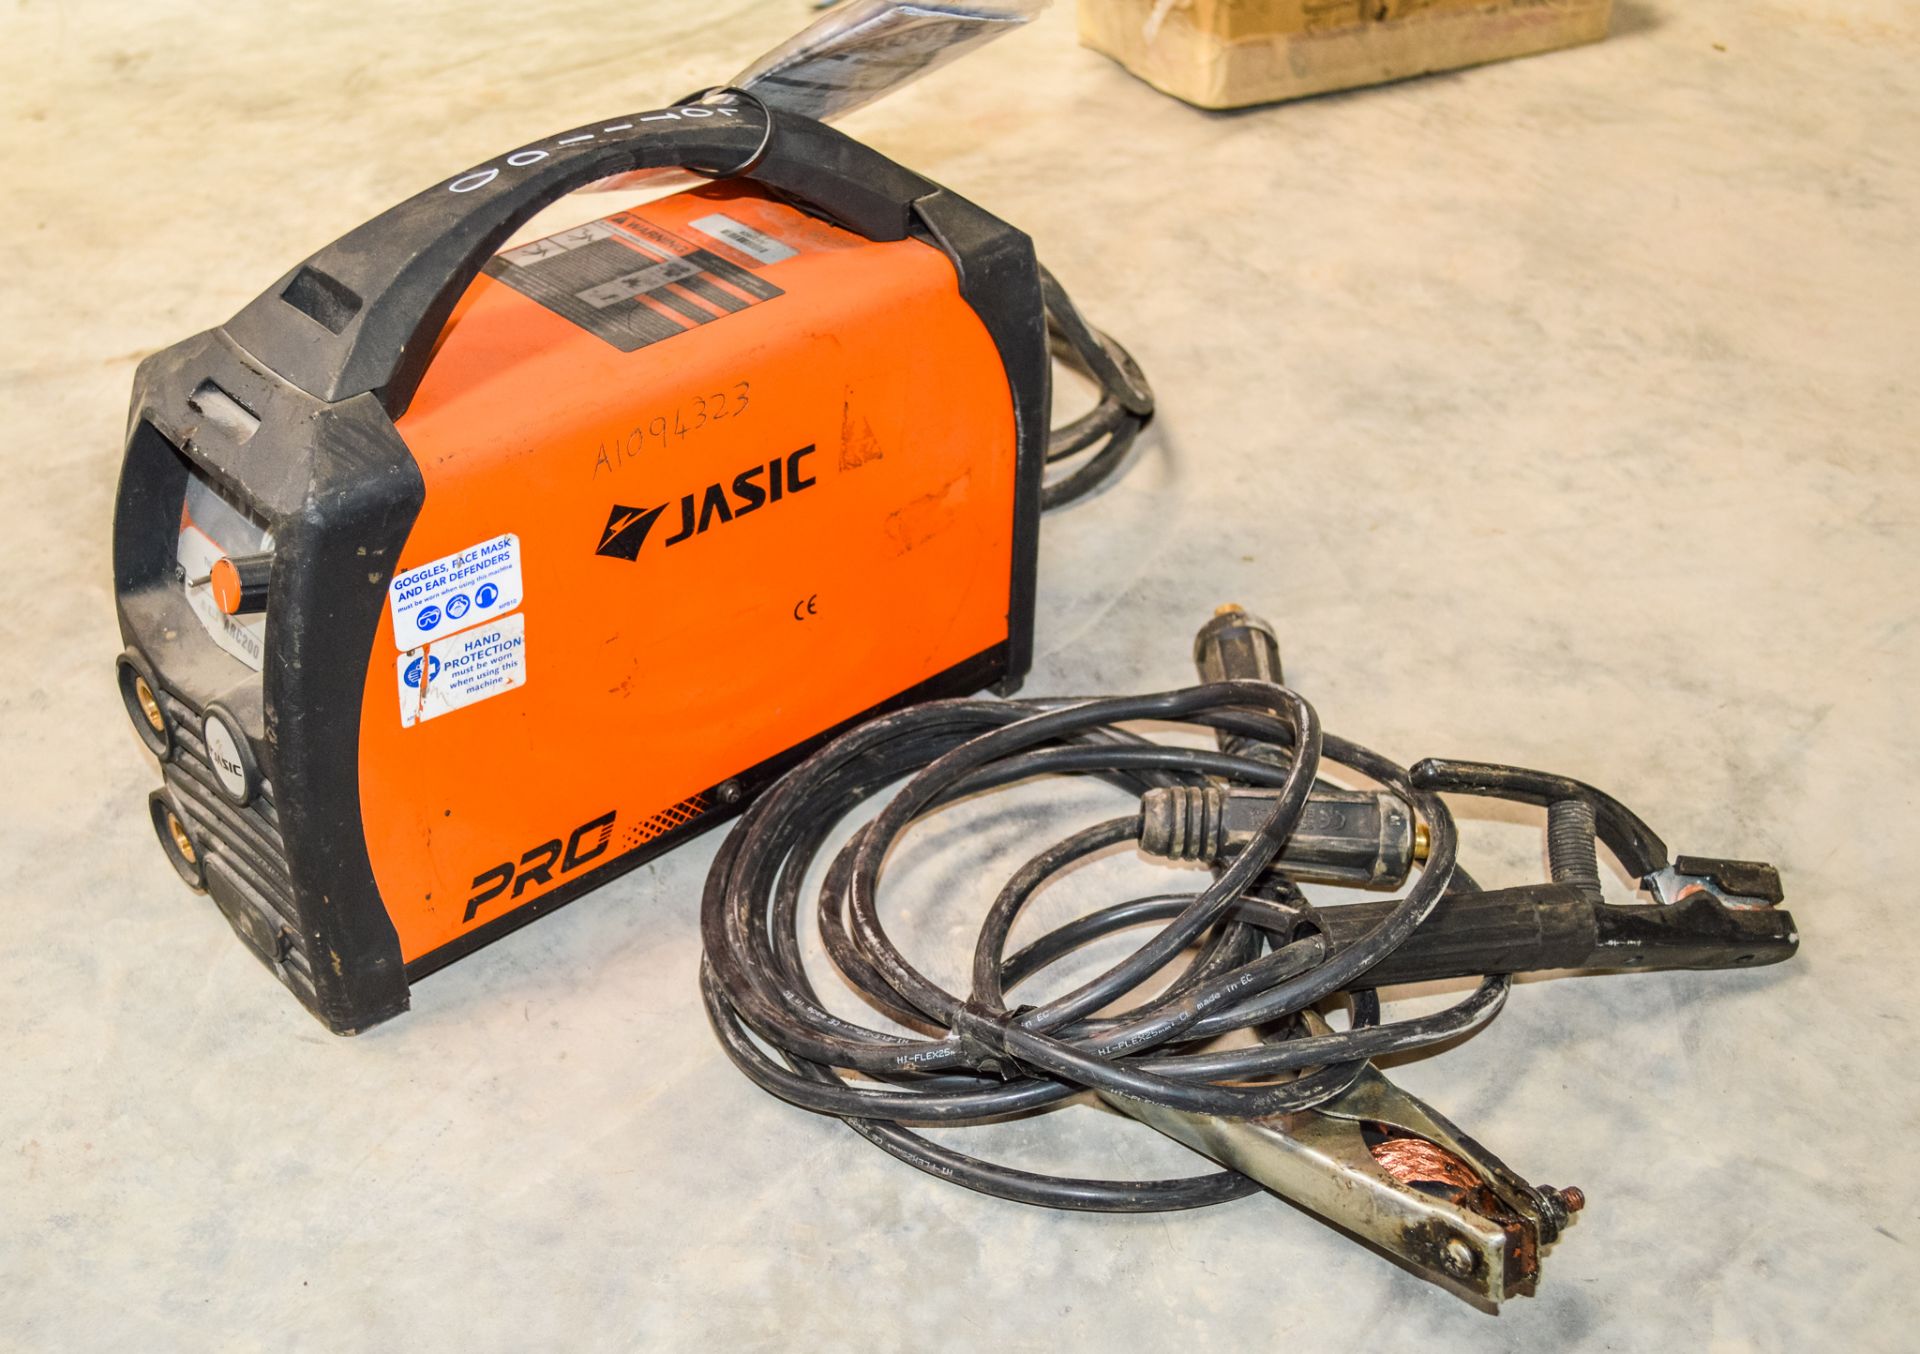 Jasic ARC200 110v arc welder c/w leads A1094323